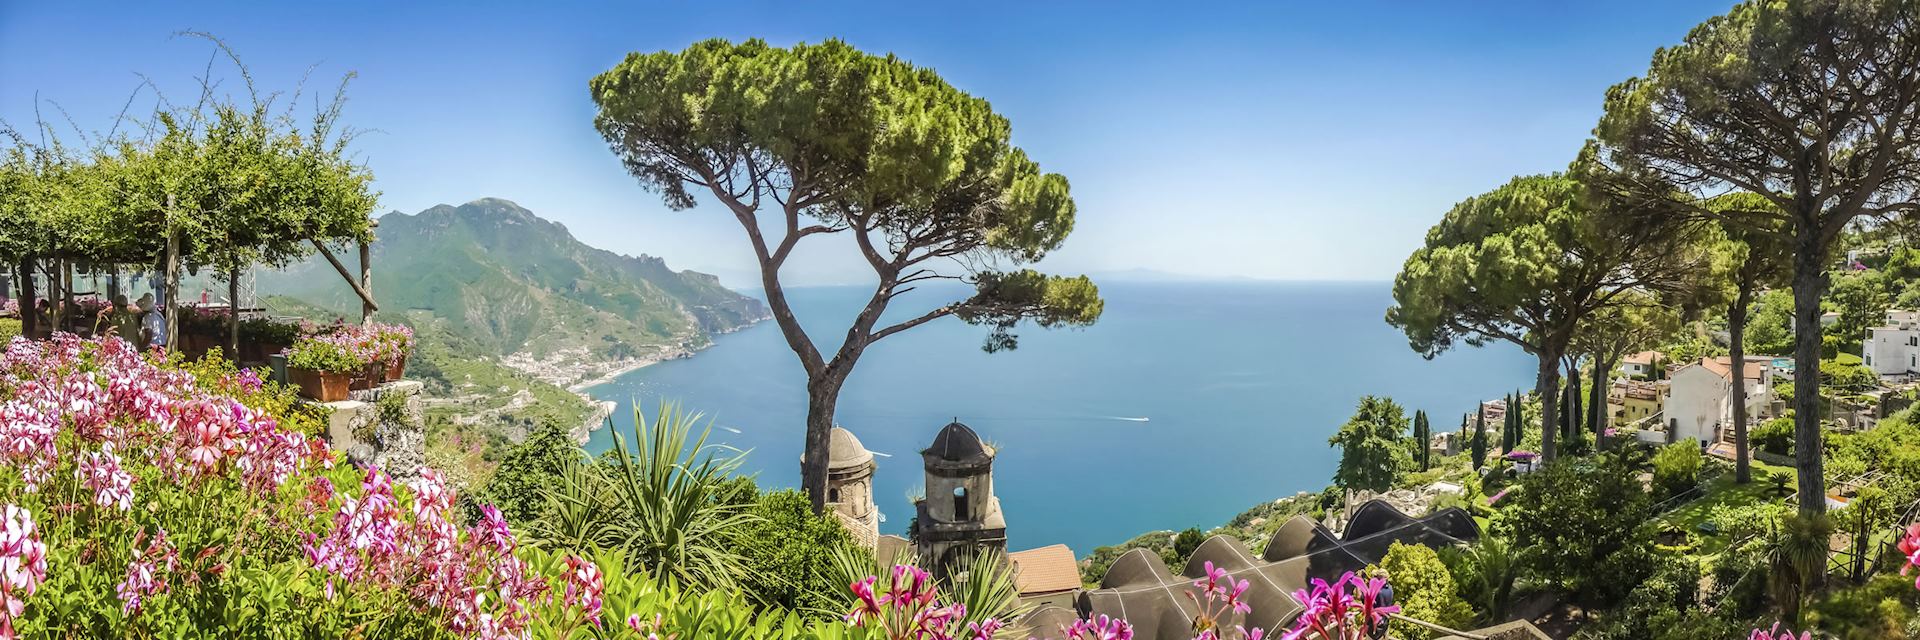 Amalfi Coast from Villa Rufolo gardens in Ravello